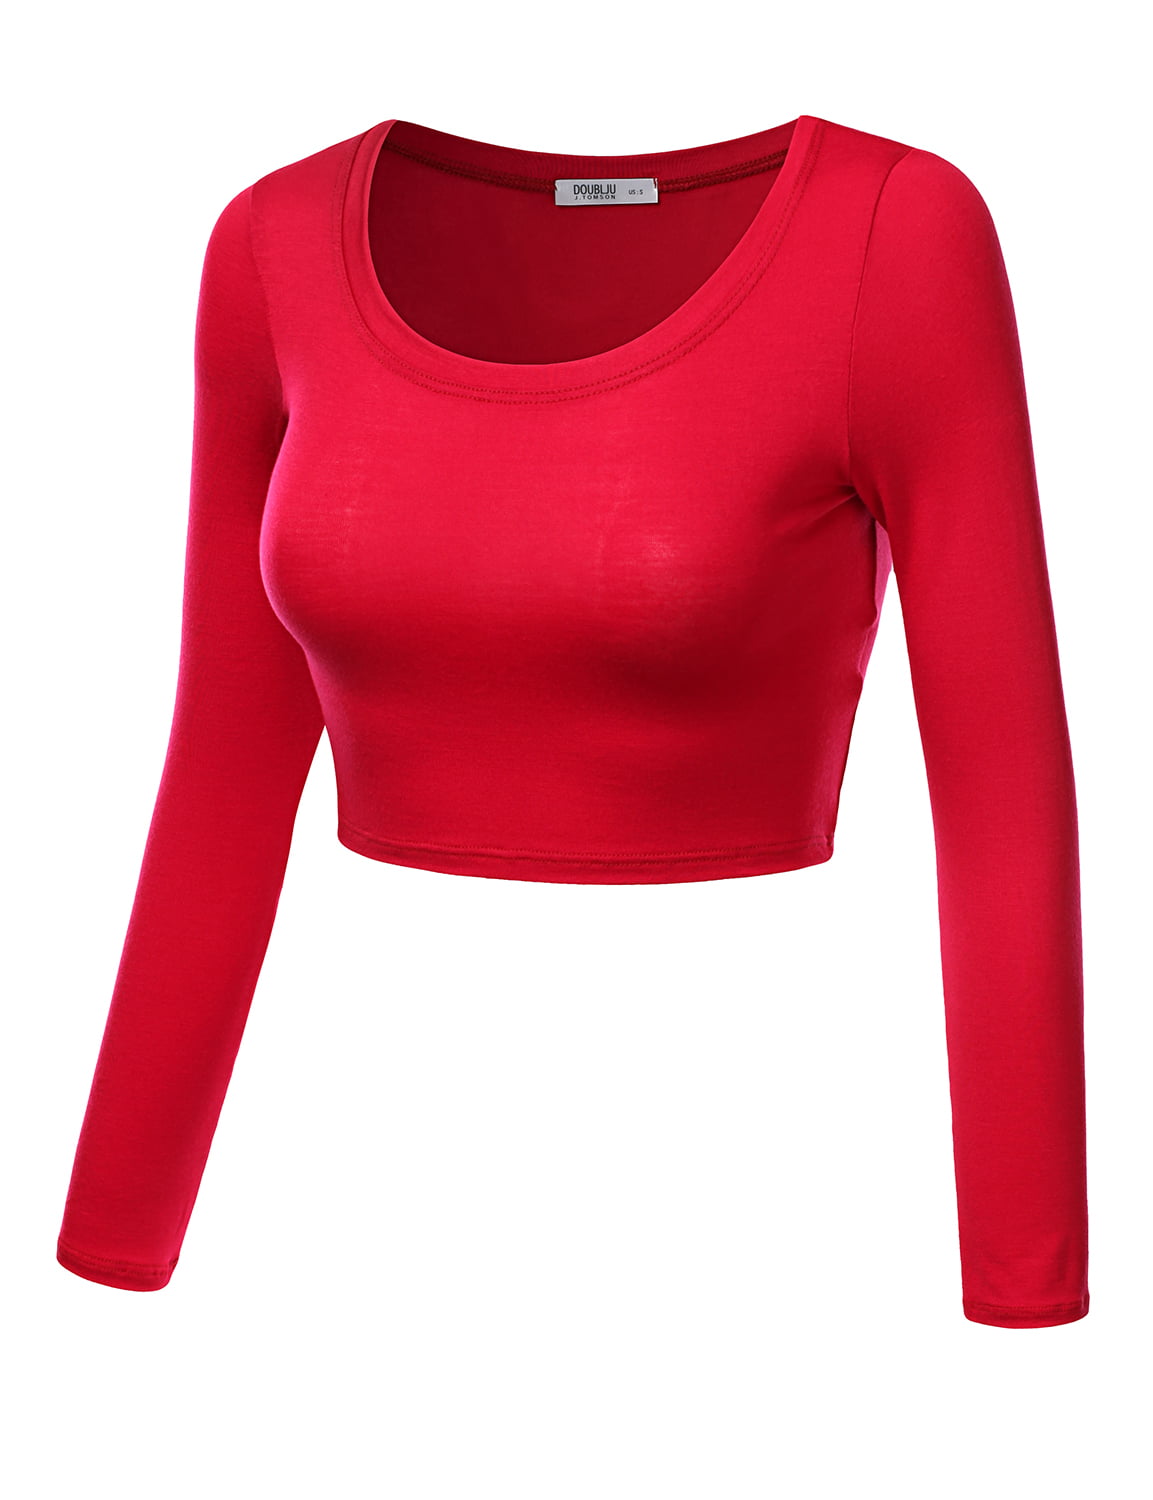 Hadudu Womens Long-Sleeve Cross Irregular Pullover Sweaters Shirt Top